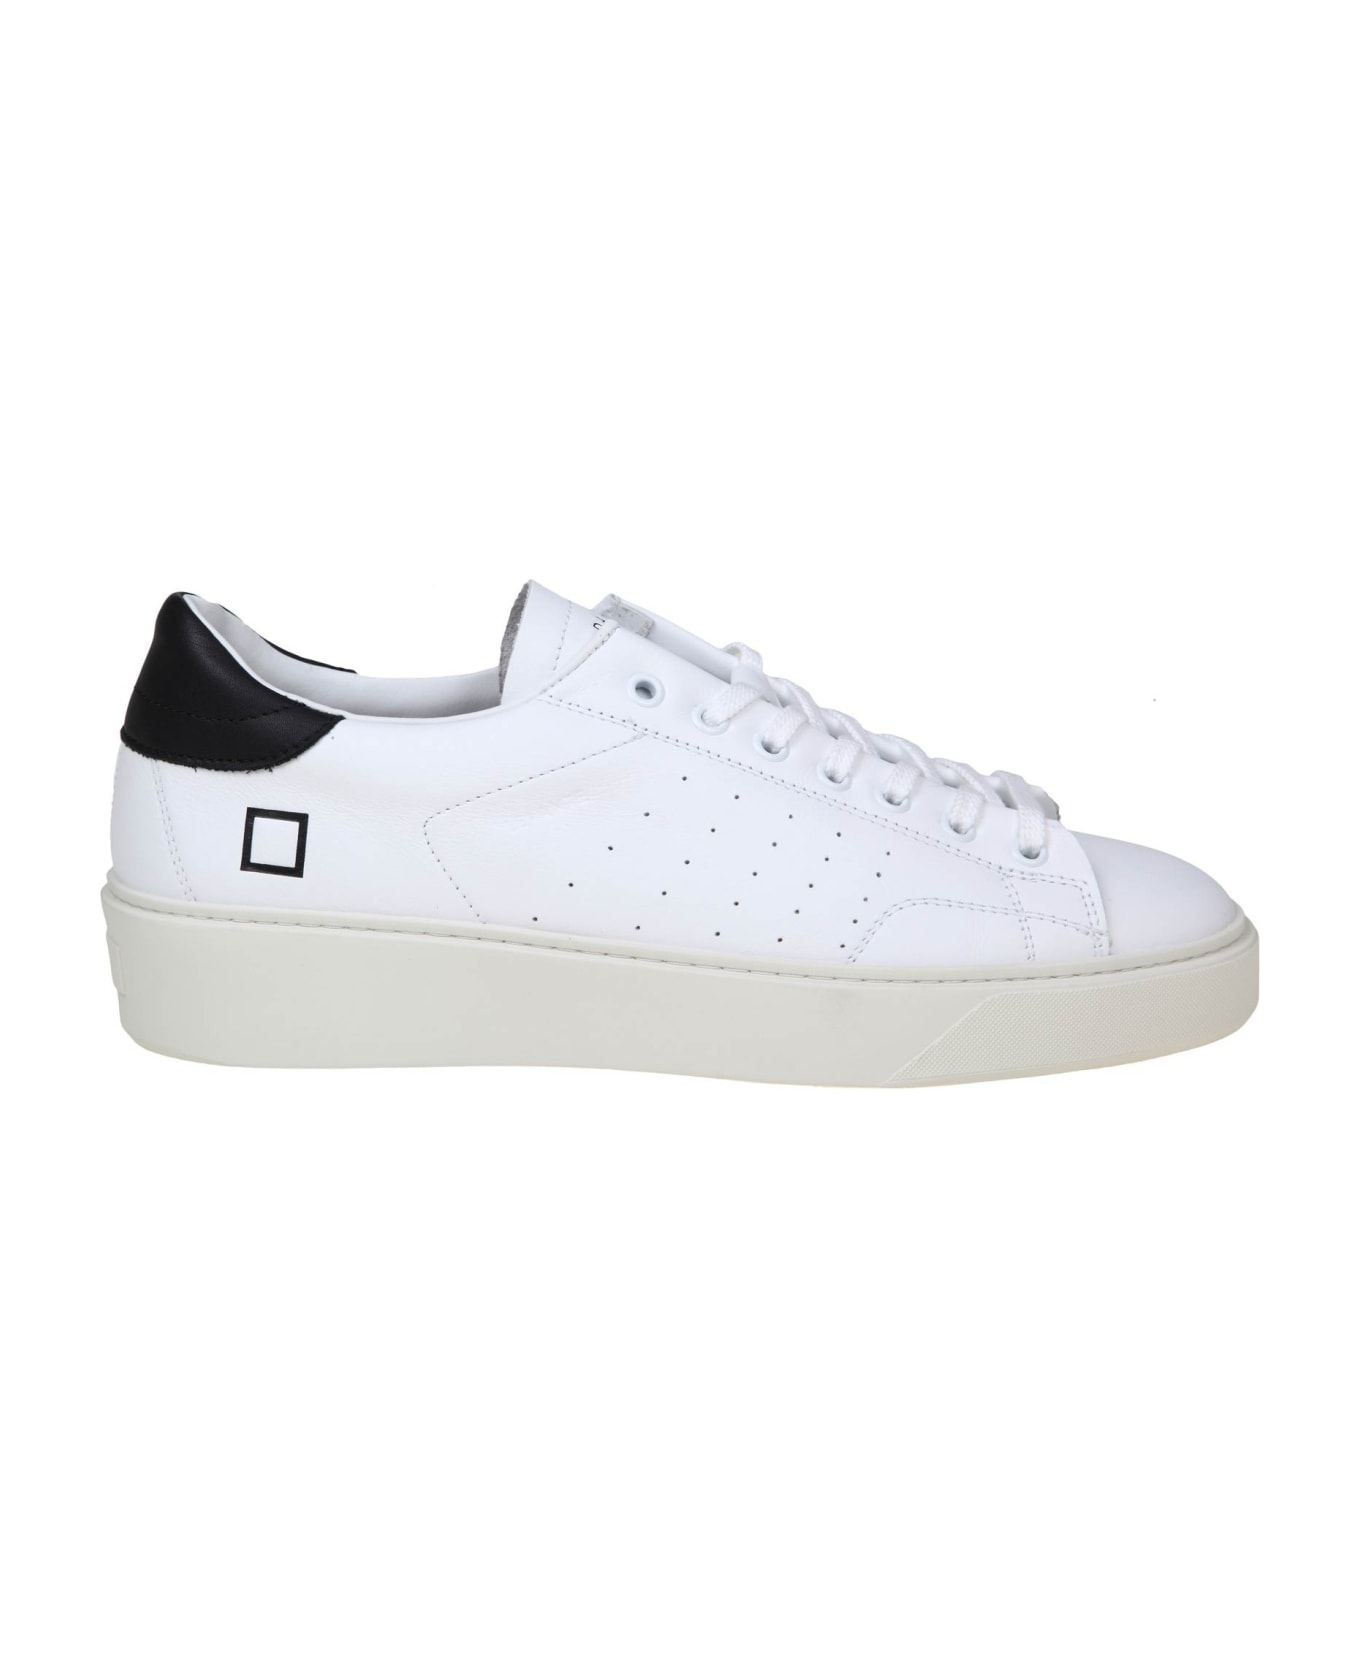 D.A.T.E. Levante Sneakers In Black/white Leather - White/Black スニーカー